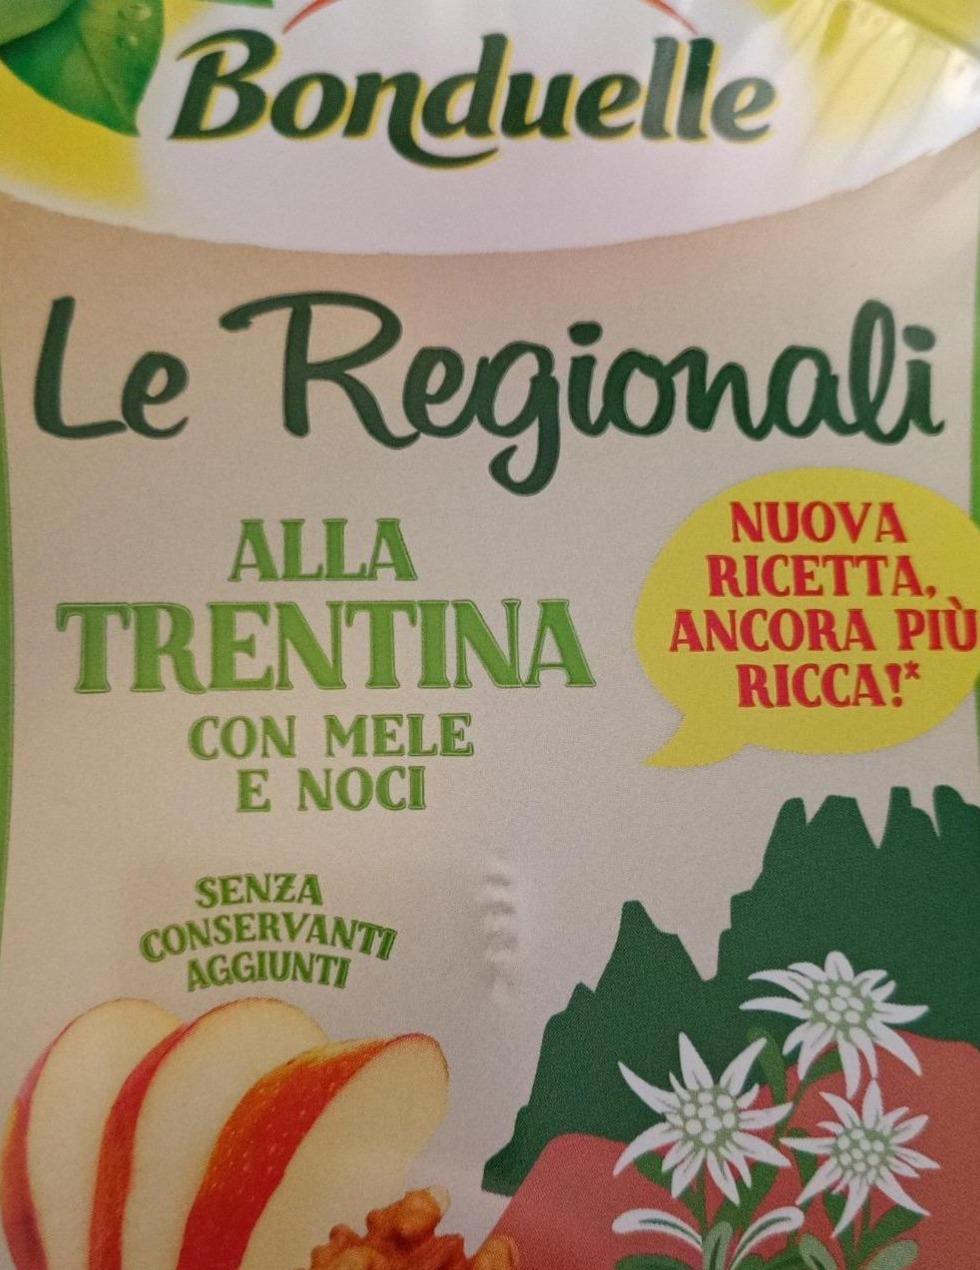 Фото - Салат Le Regionali alla Trentina з яблуками та волоськими горіхами Bonduelle